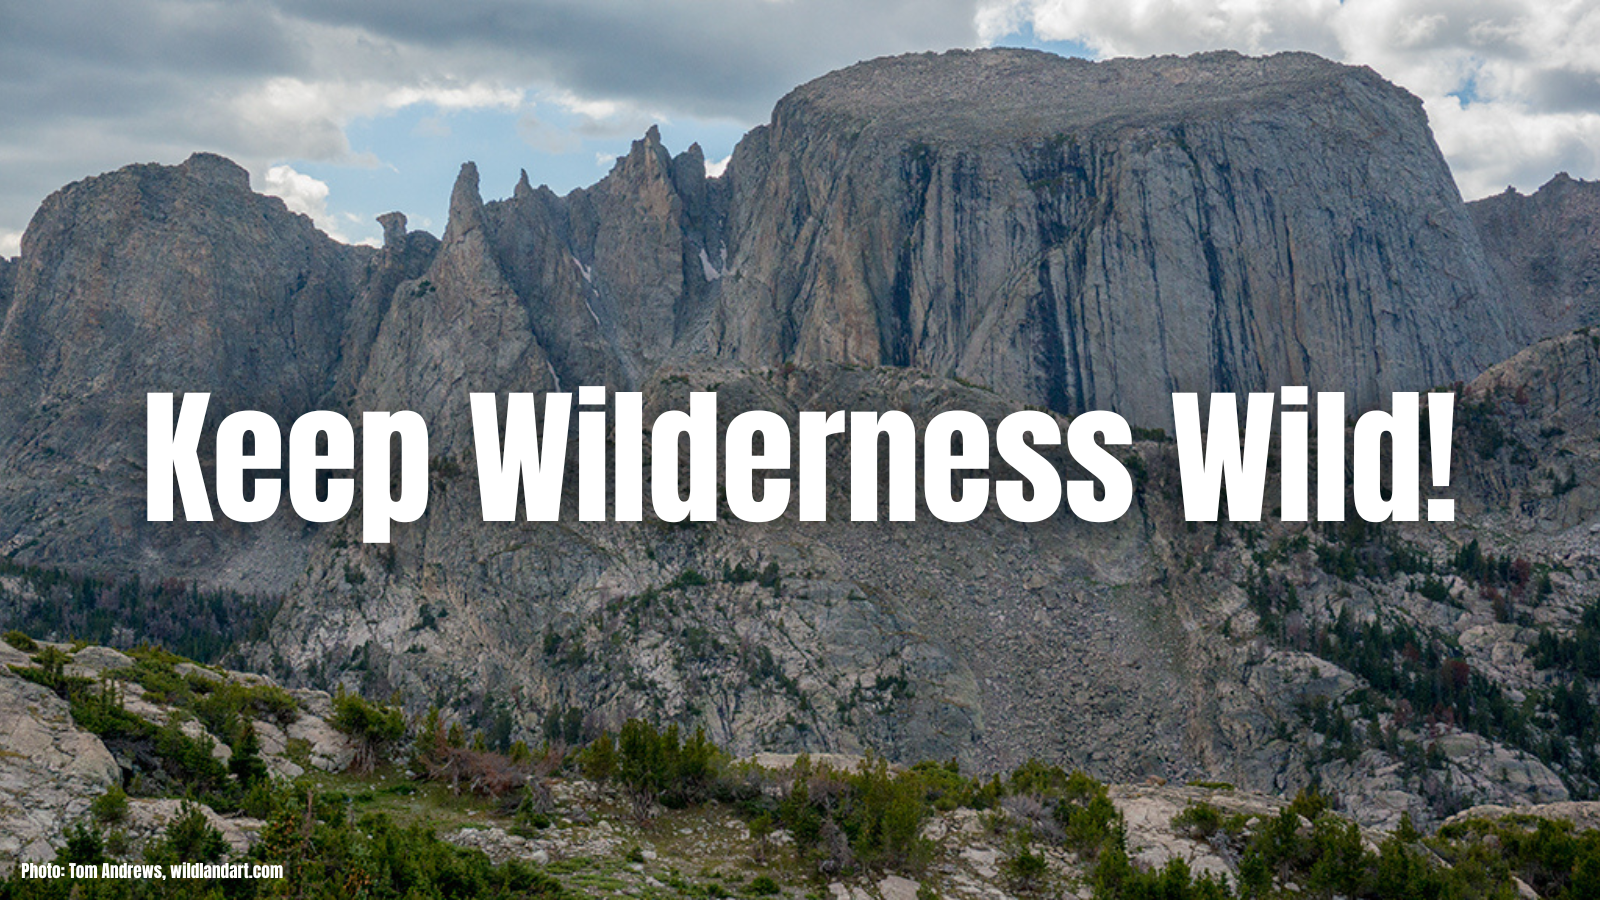 Keep Wilderness Wild Tom Andrews rock meme